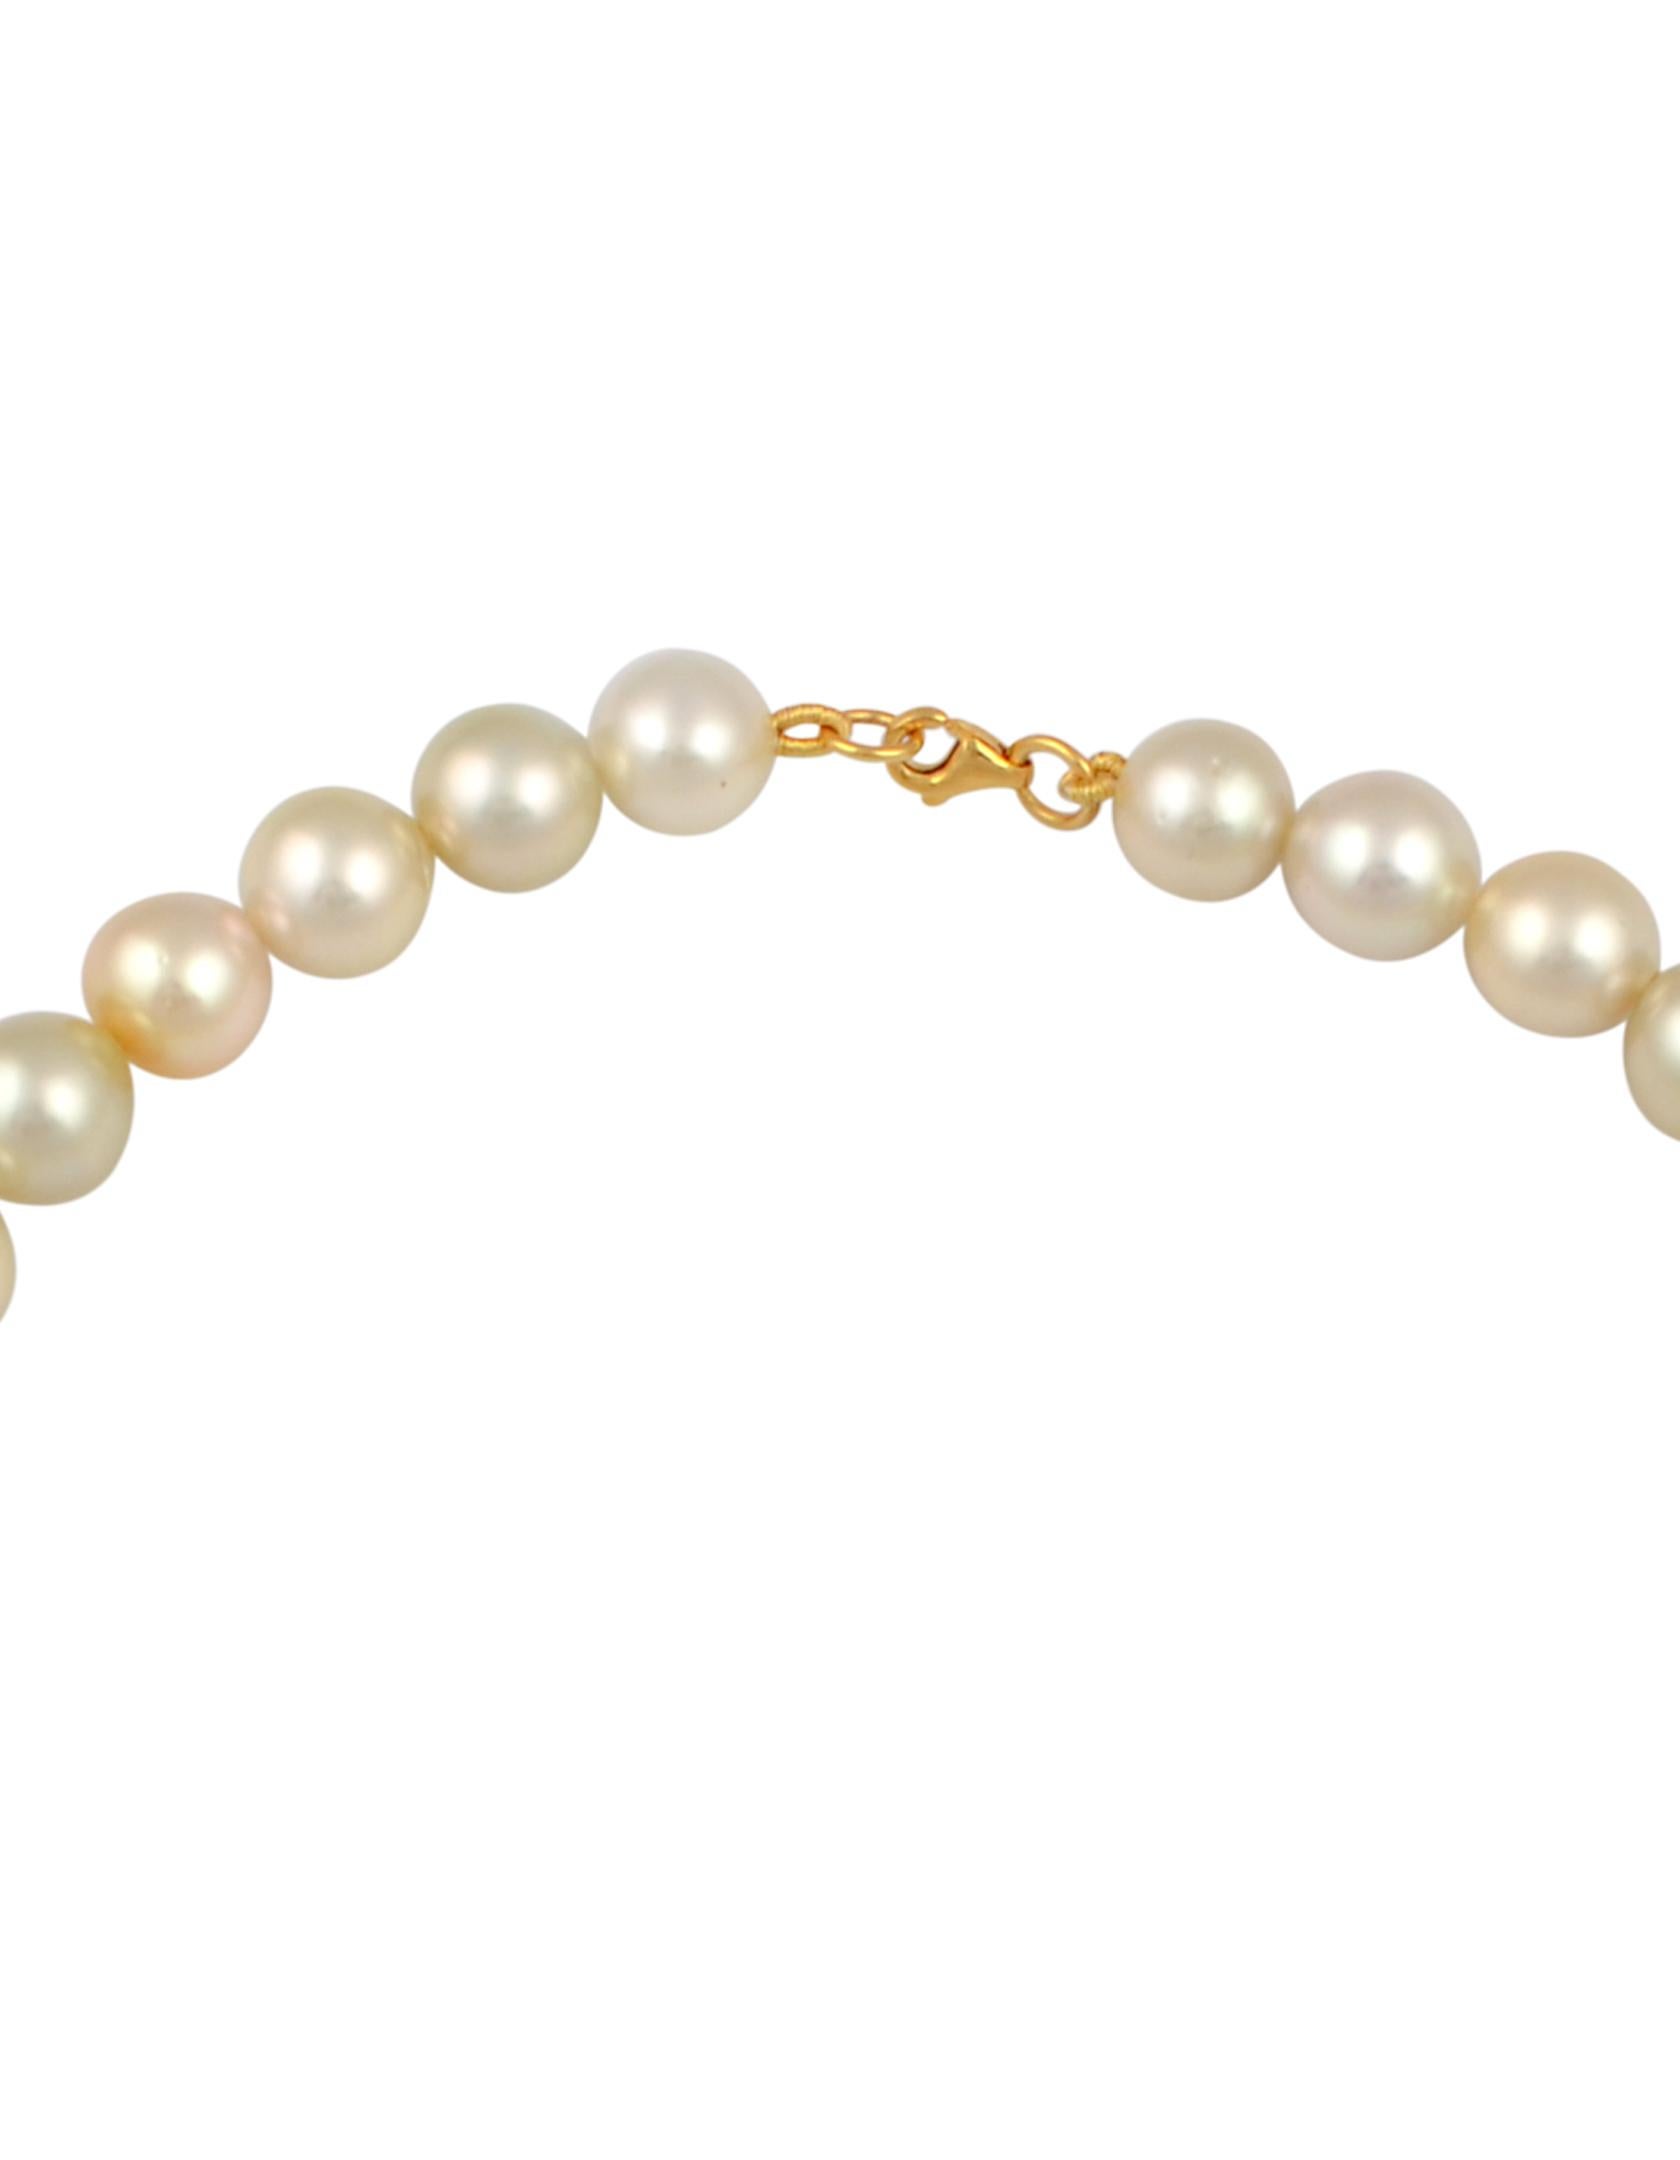 original pearls price